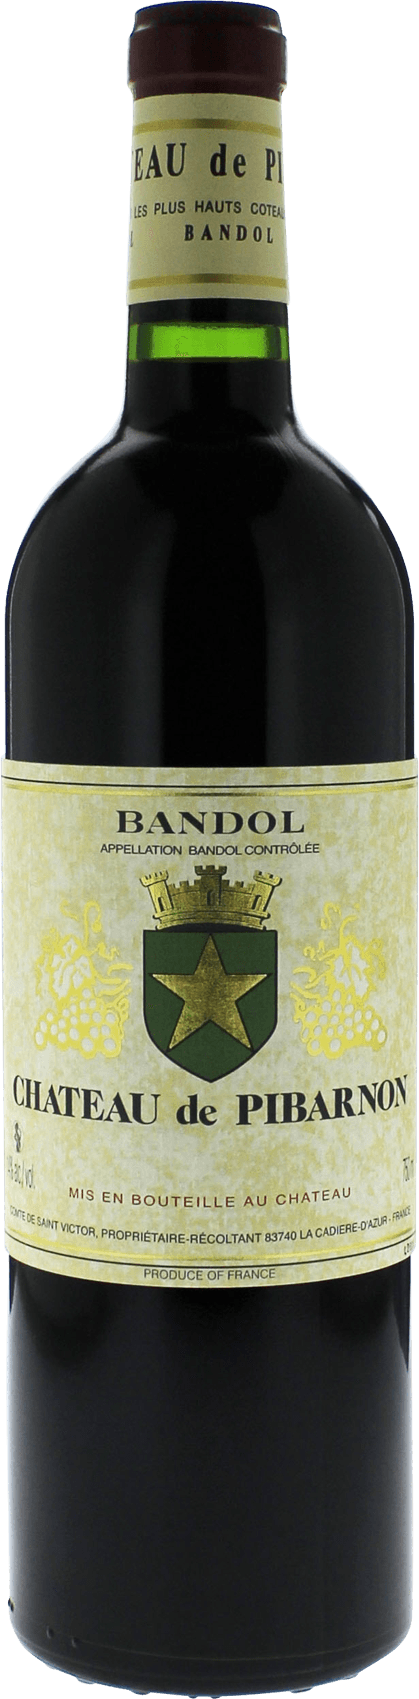 Bandol domaine de pibarnon rouge 1998  Bandol, Slection provence rouge